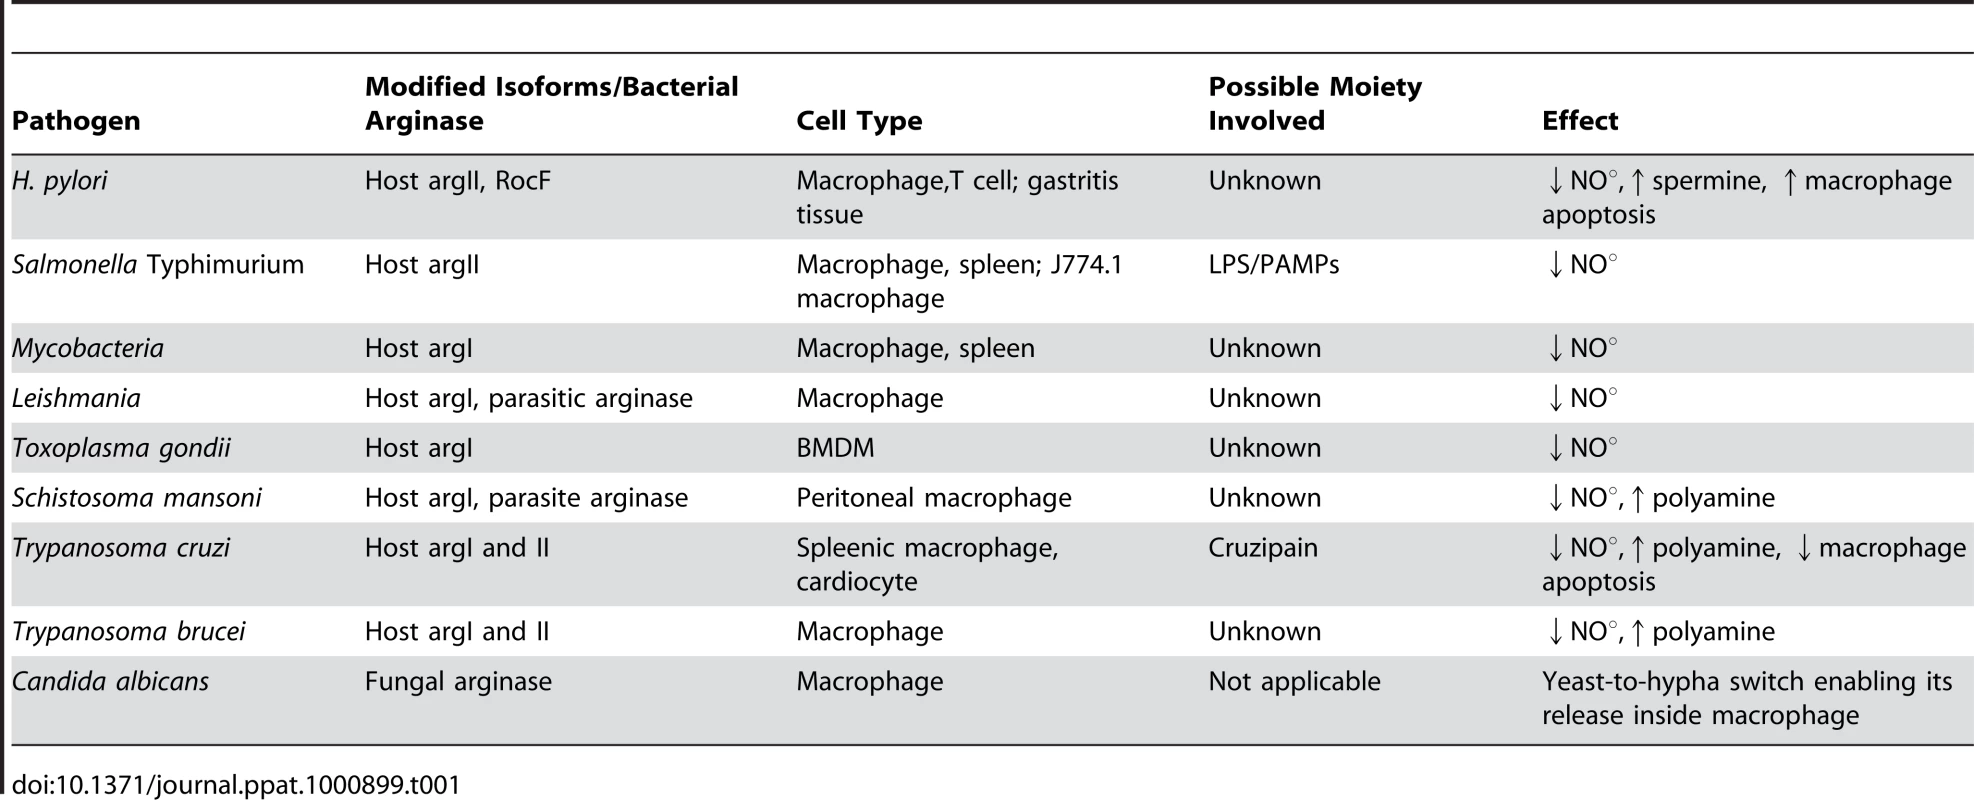 Modulation of arginase by various pathogens.